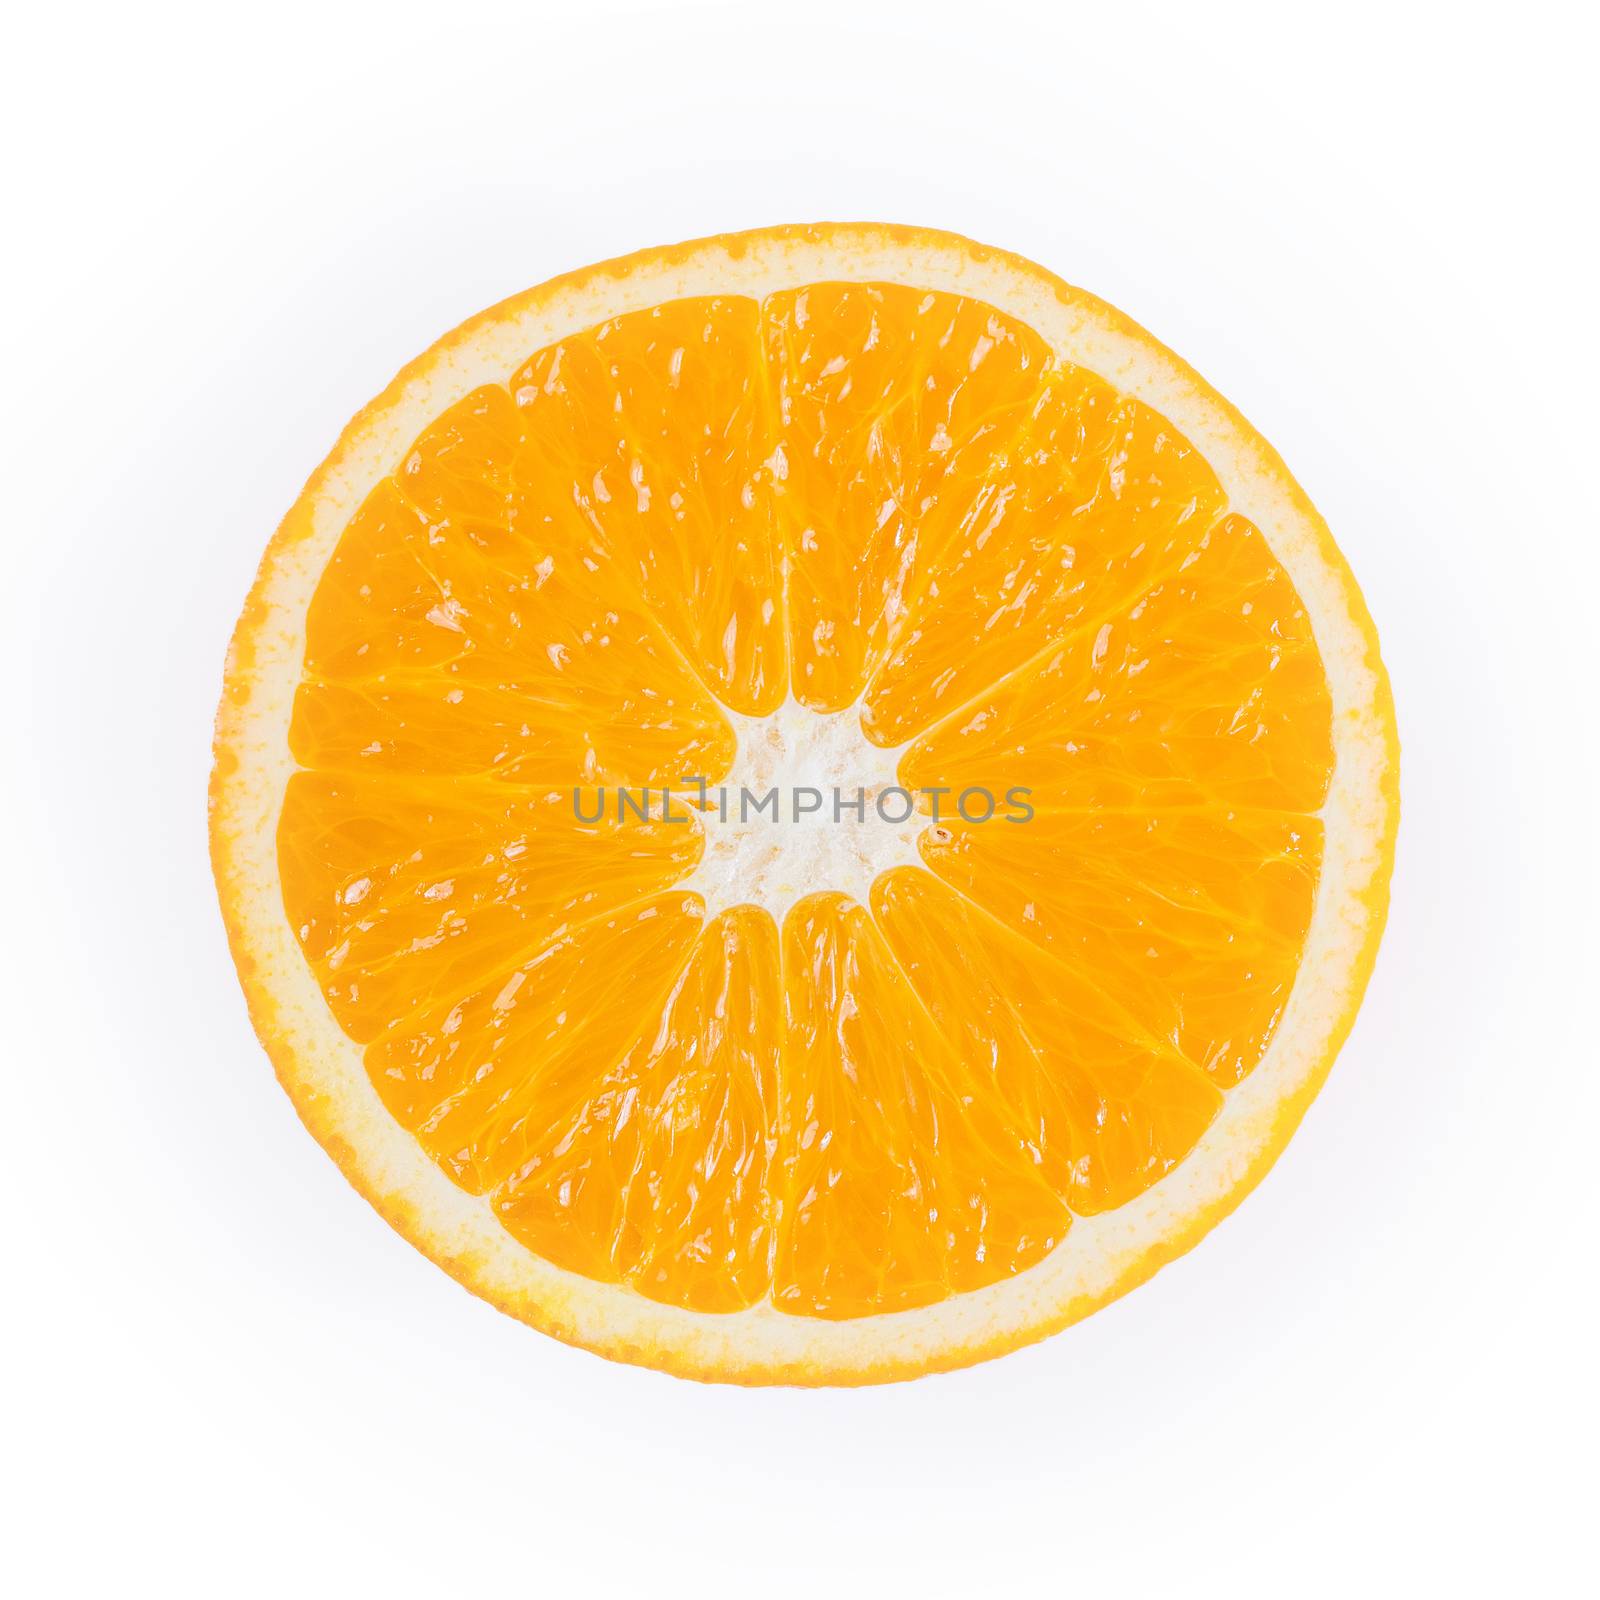 Tasty slice of an orange over a white background